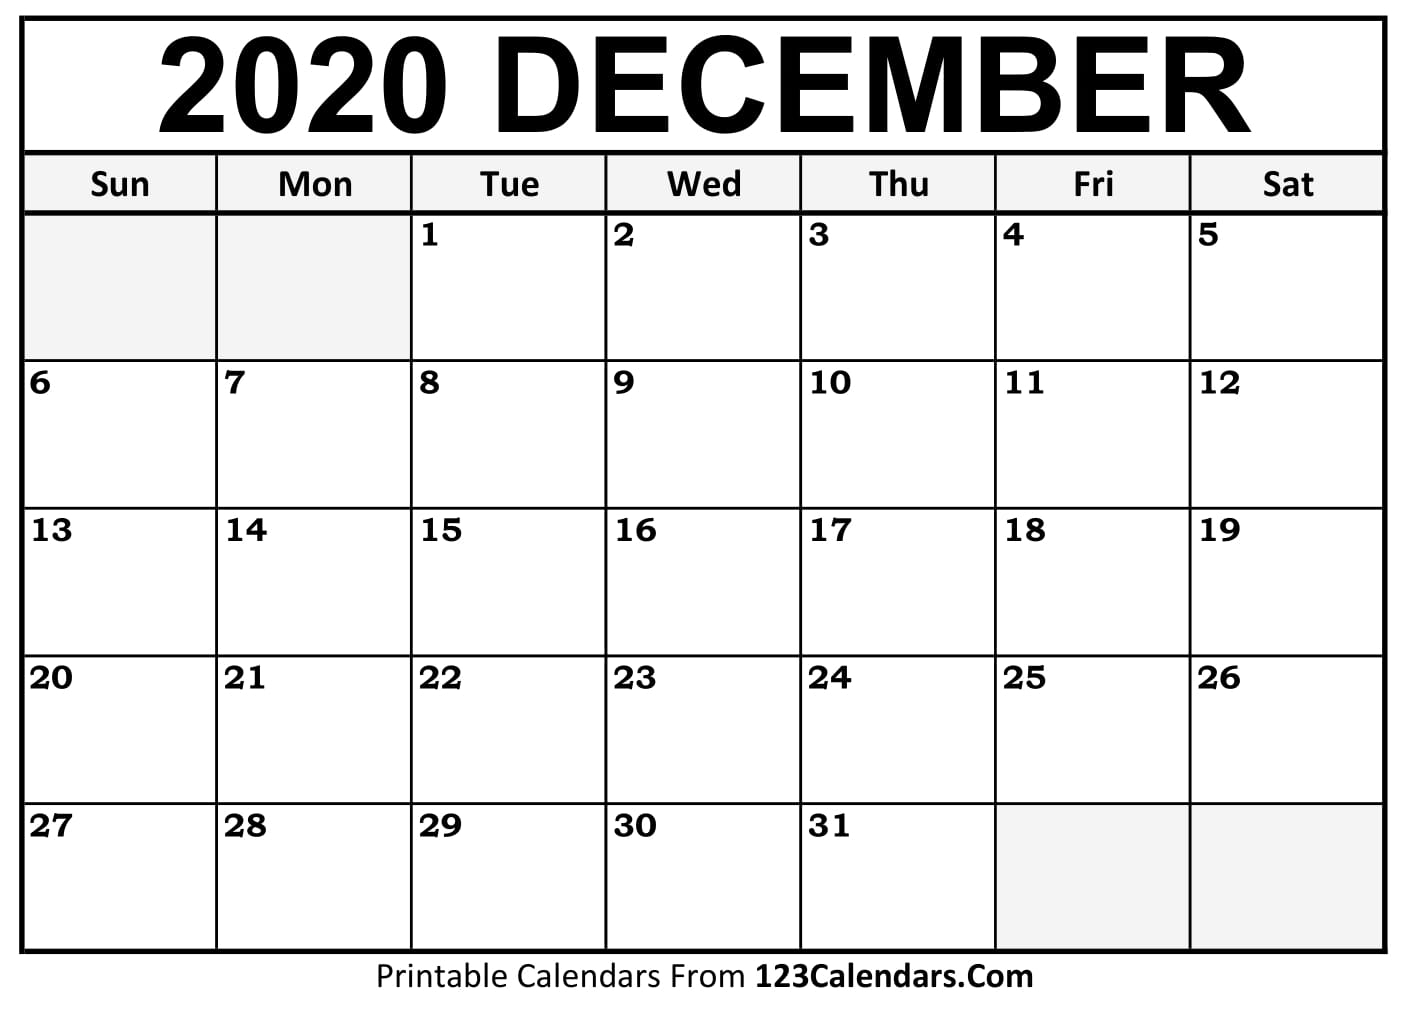 December 2020 Printable Calendar | 123Calendars